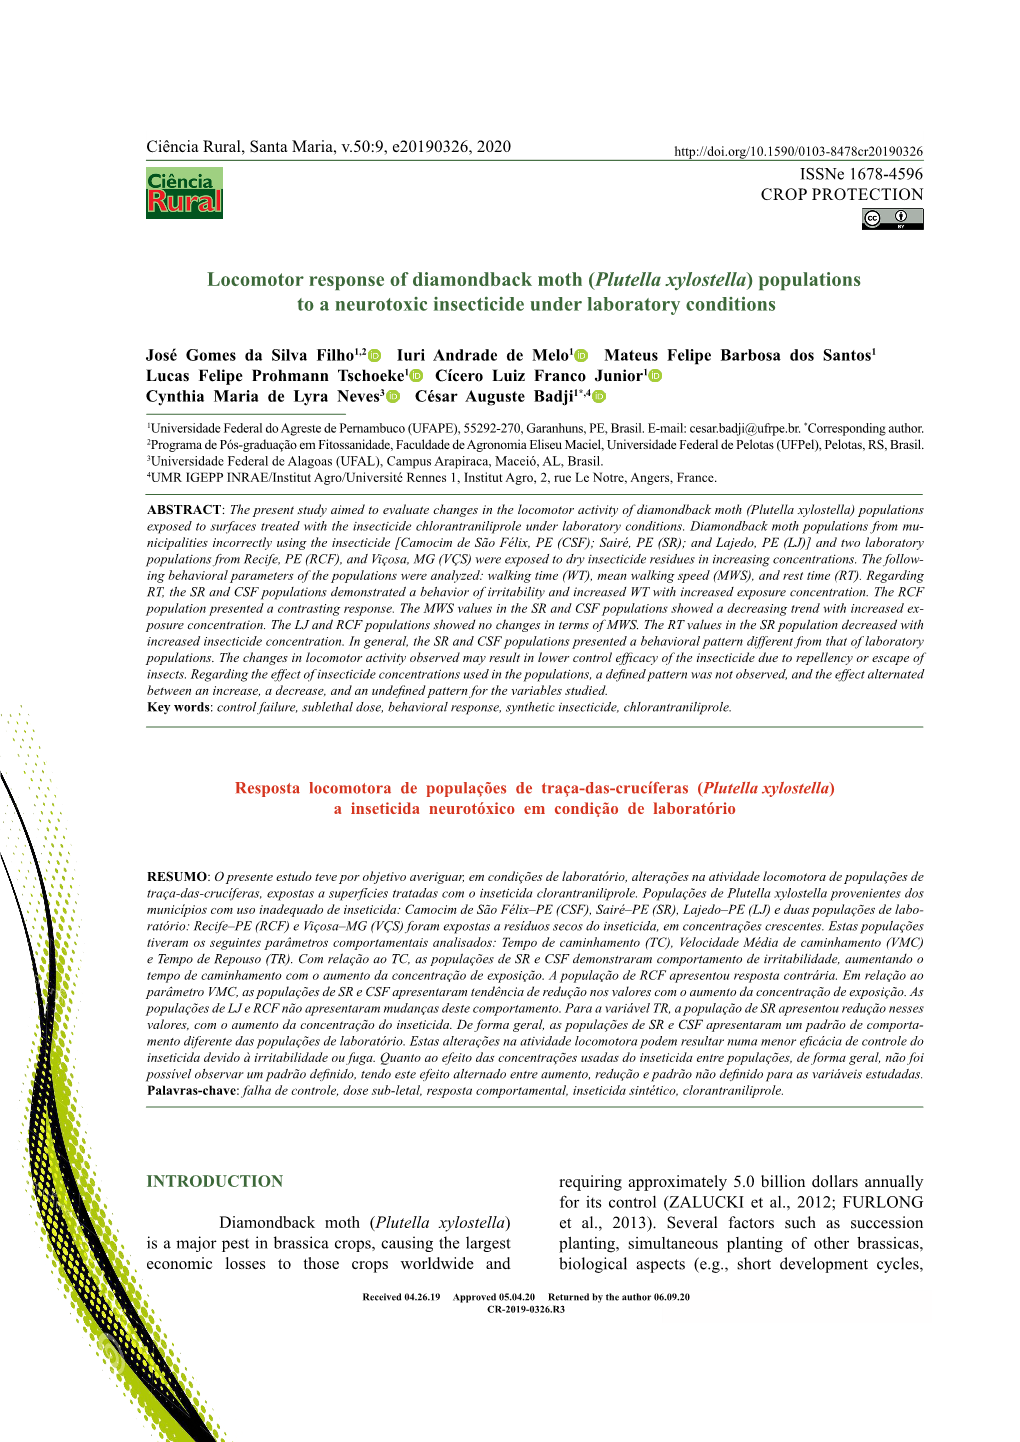 Locomotor Response of Diamondback Moth (Plutella Xylostella) Populations to a Neurotoxic Insecticide Under Laboratory Conditions